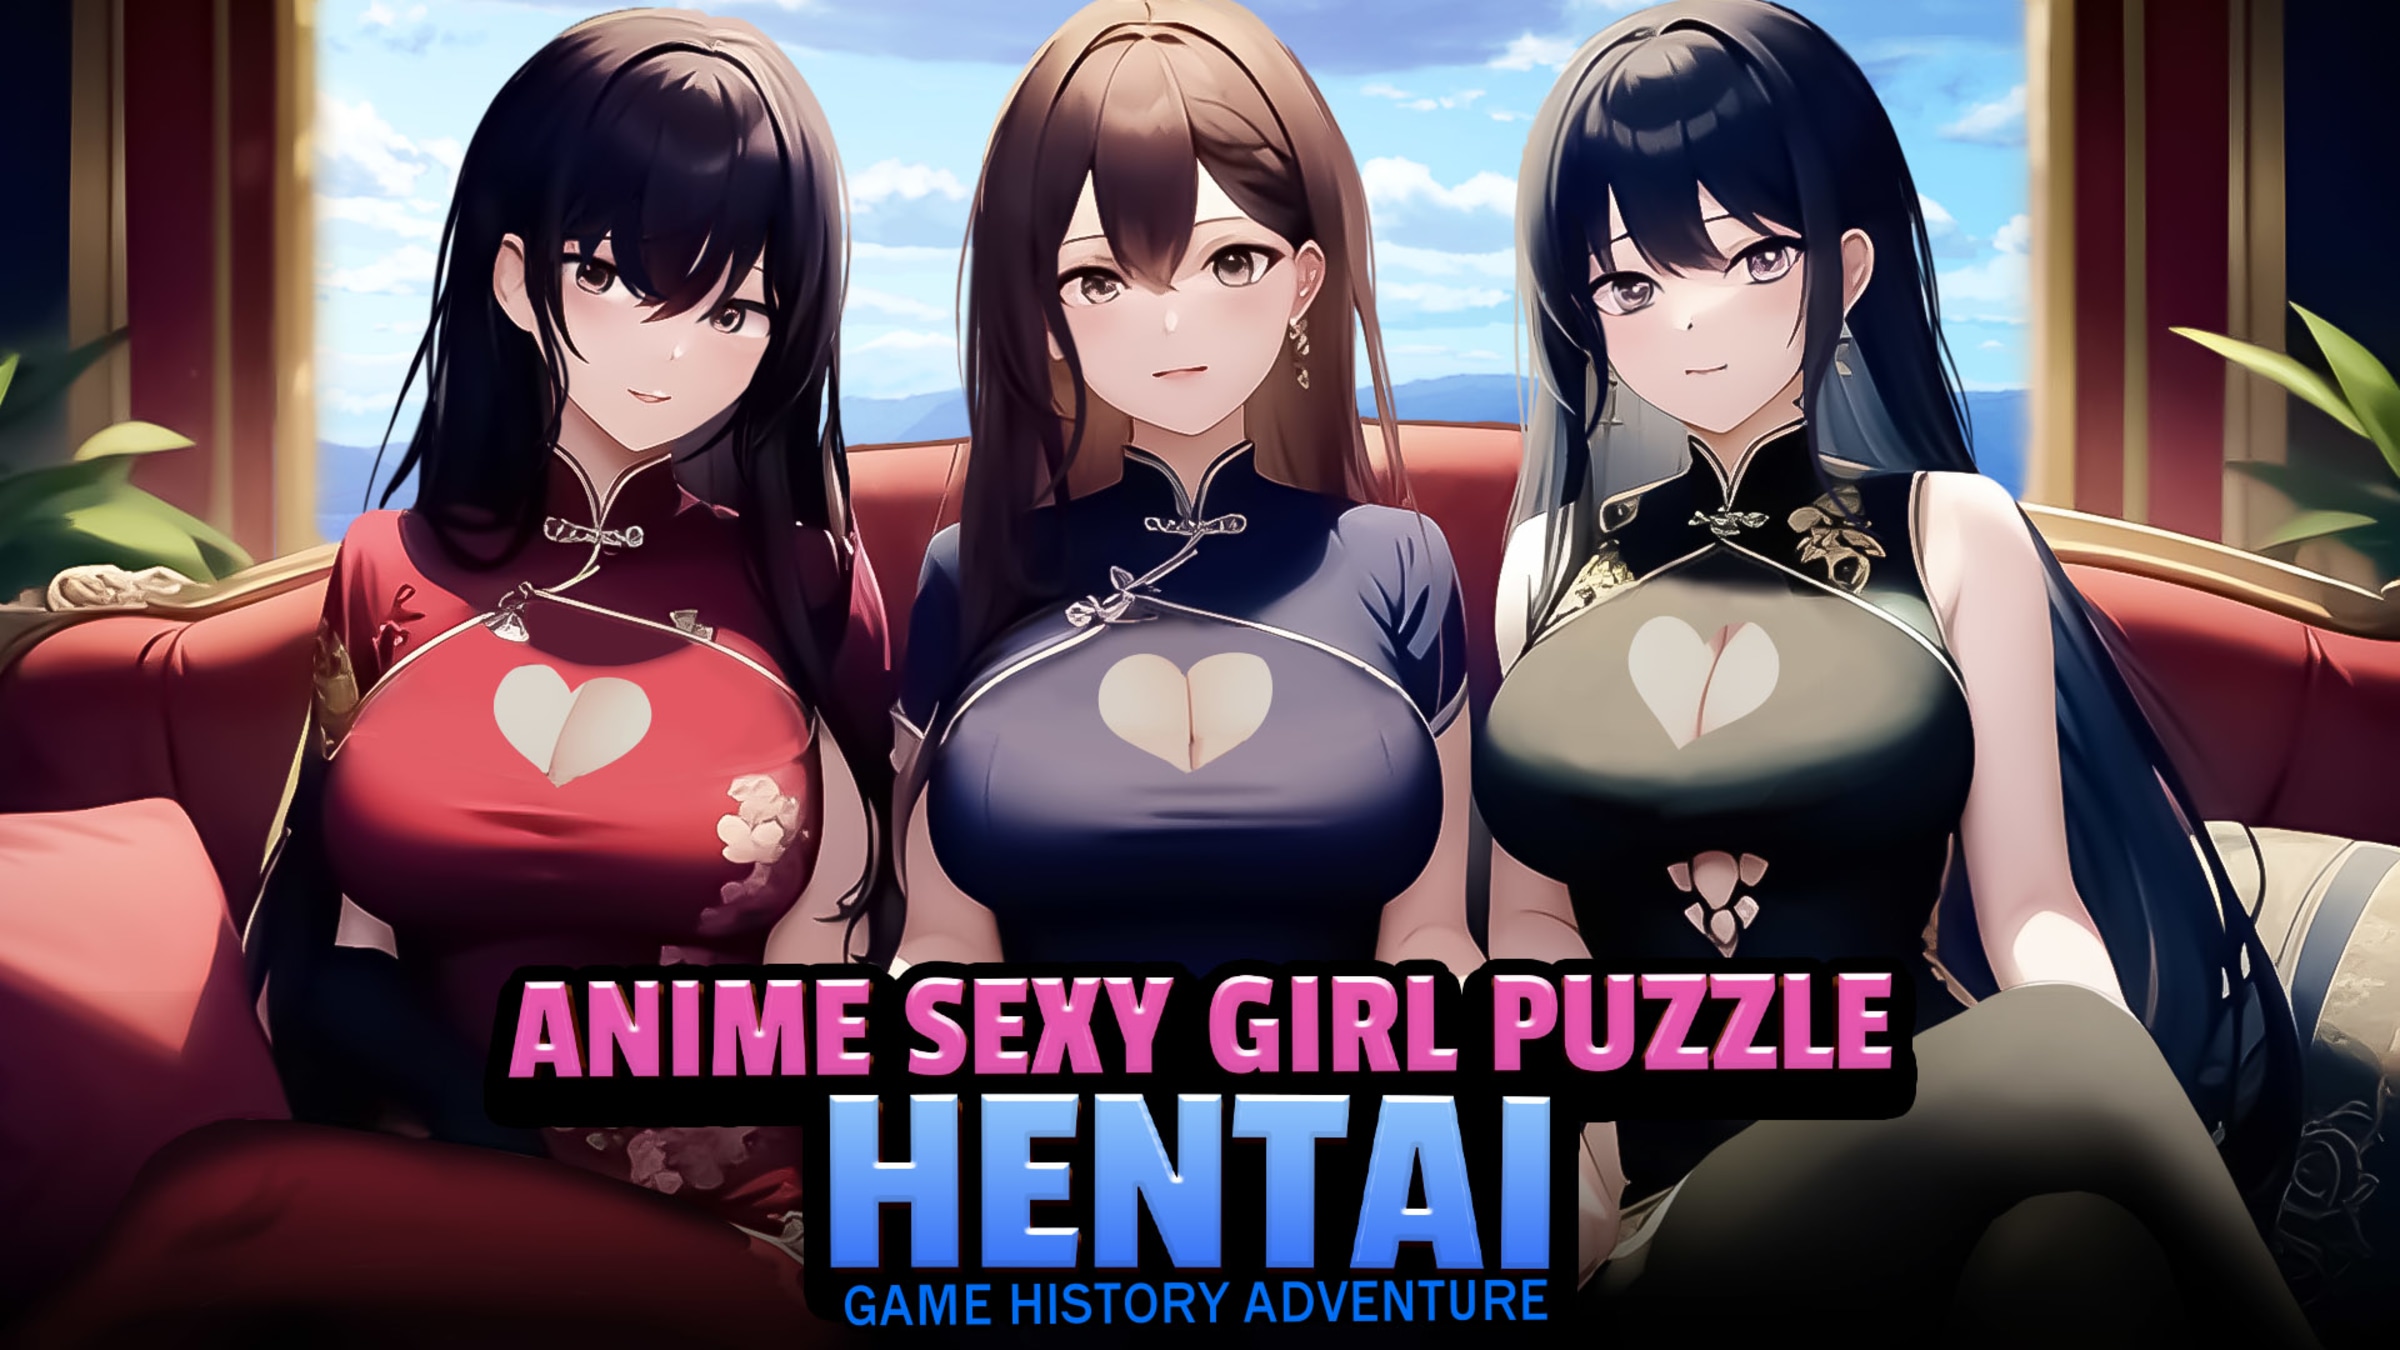 desmond winn recommends Sexy Anime Girl Hentai